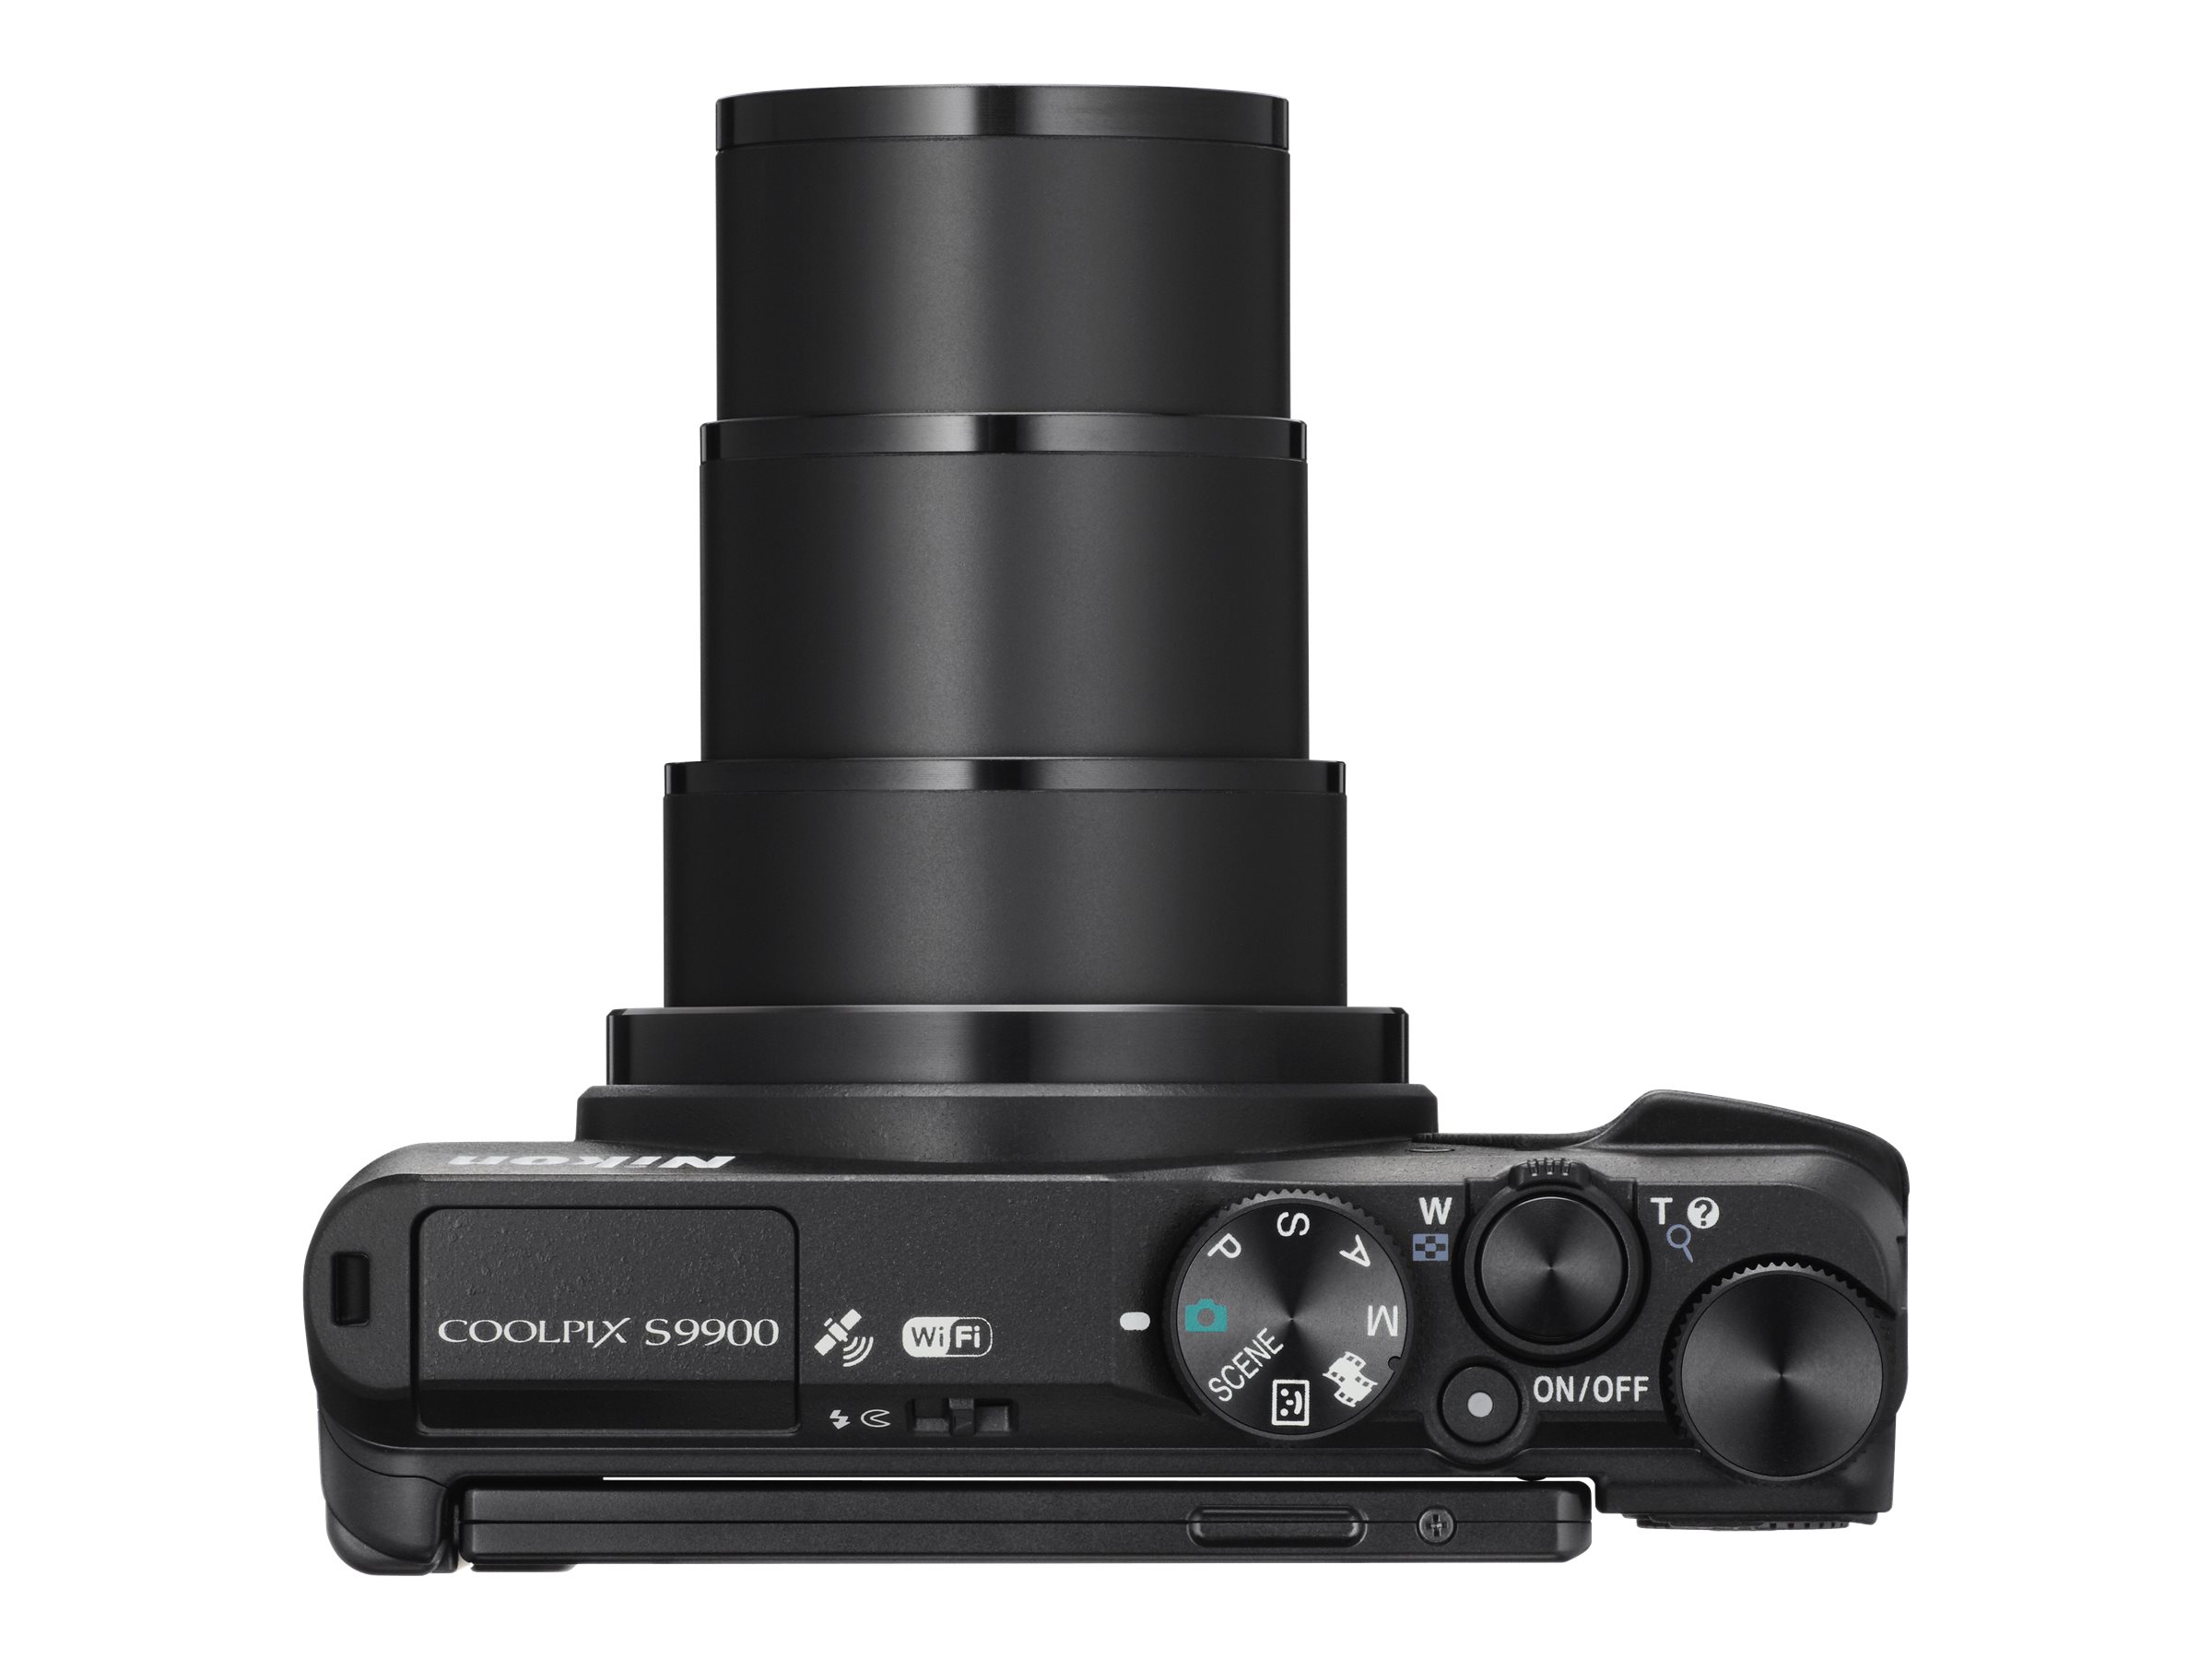 Nikon Coolpix S9900 - Digital camera - compact - 16.0 MP - 1080p - 30x optical zoom - Wi-Fi, NFC - black - image 5 of 6